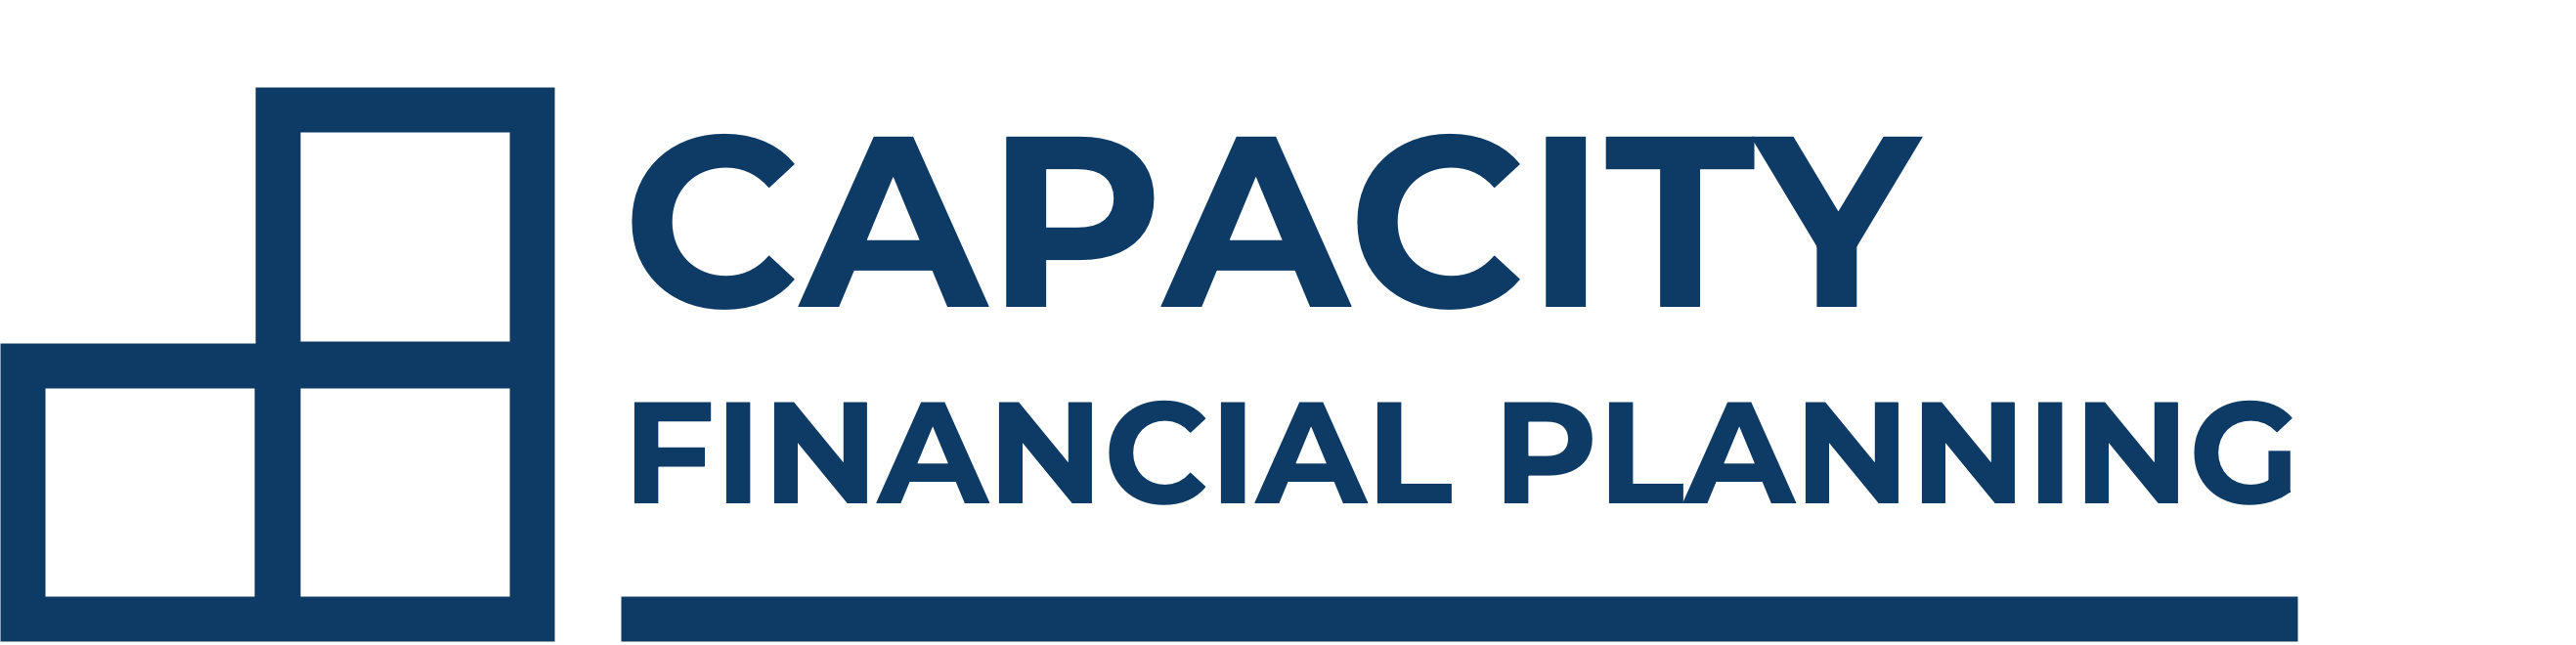 CAPACITY FINANCIAL PLANNING logo